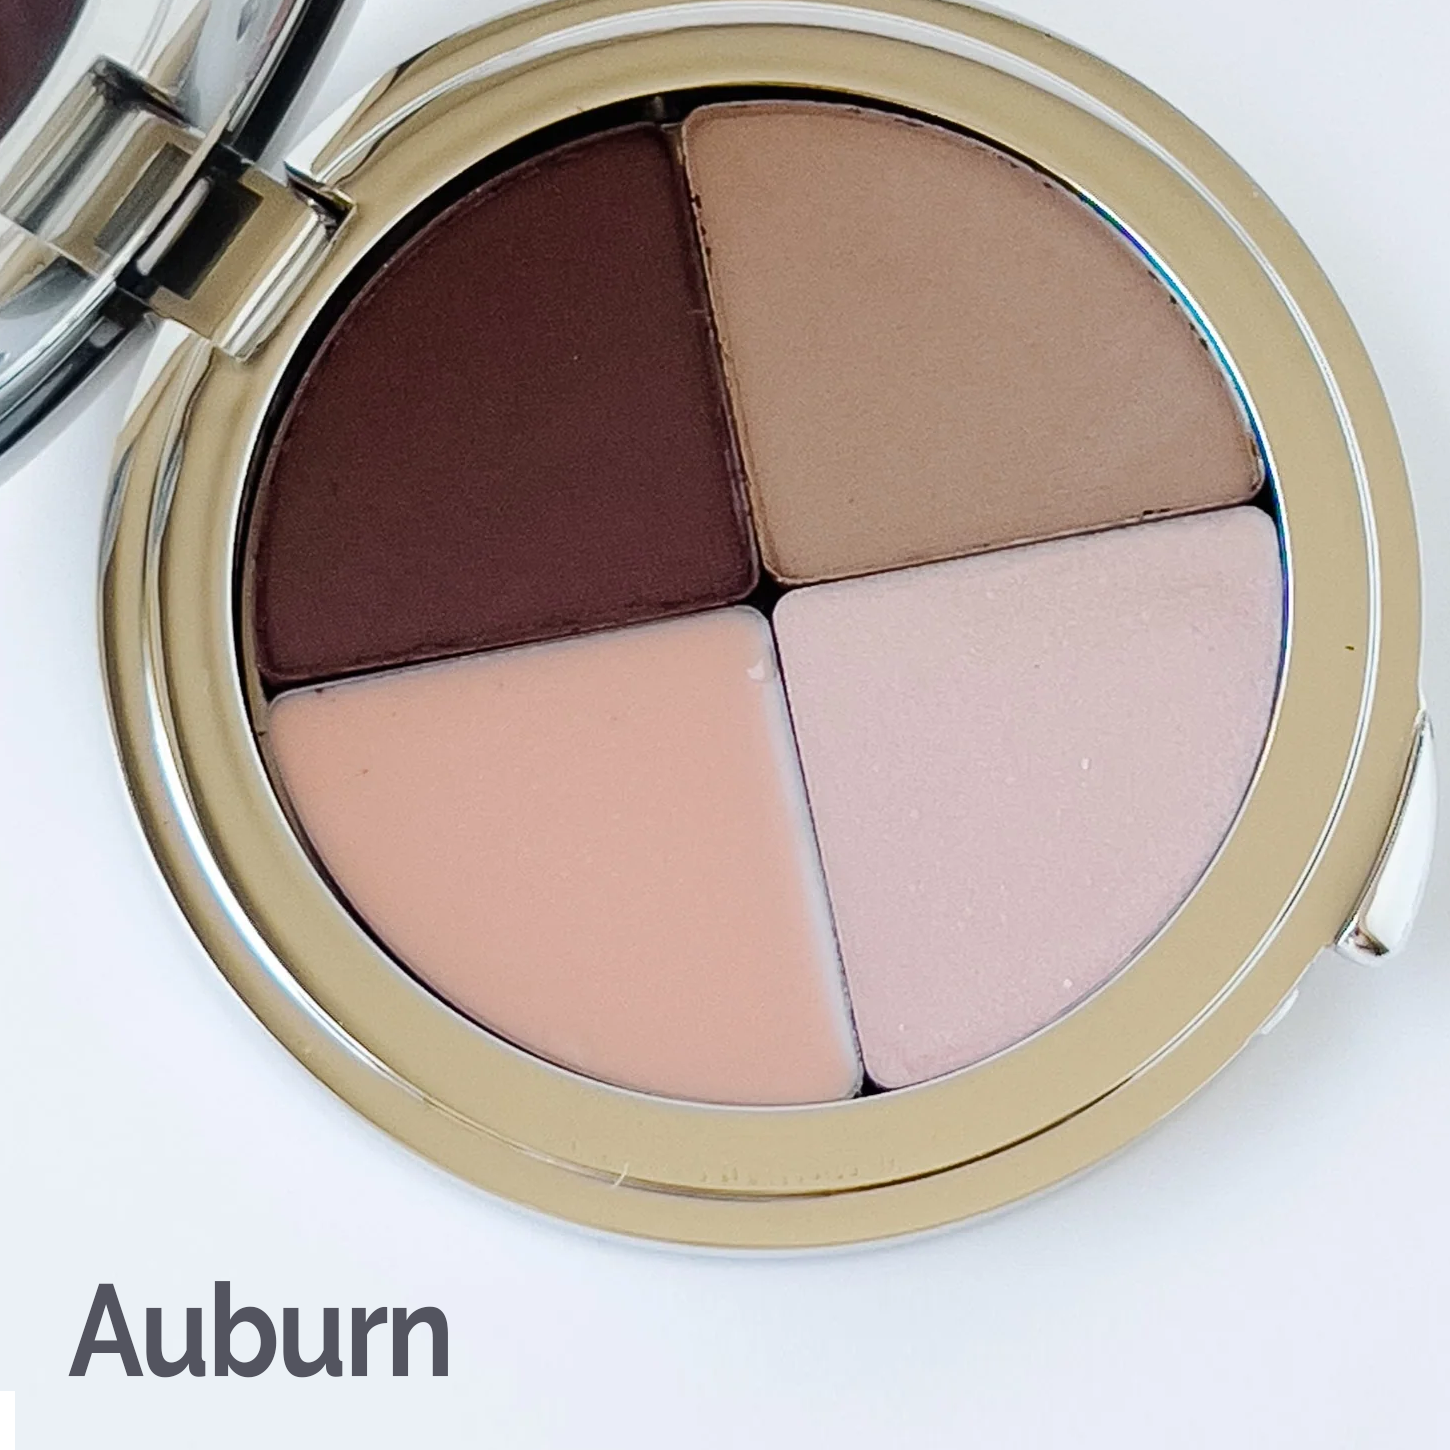 Auburn color swatch #auburn